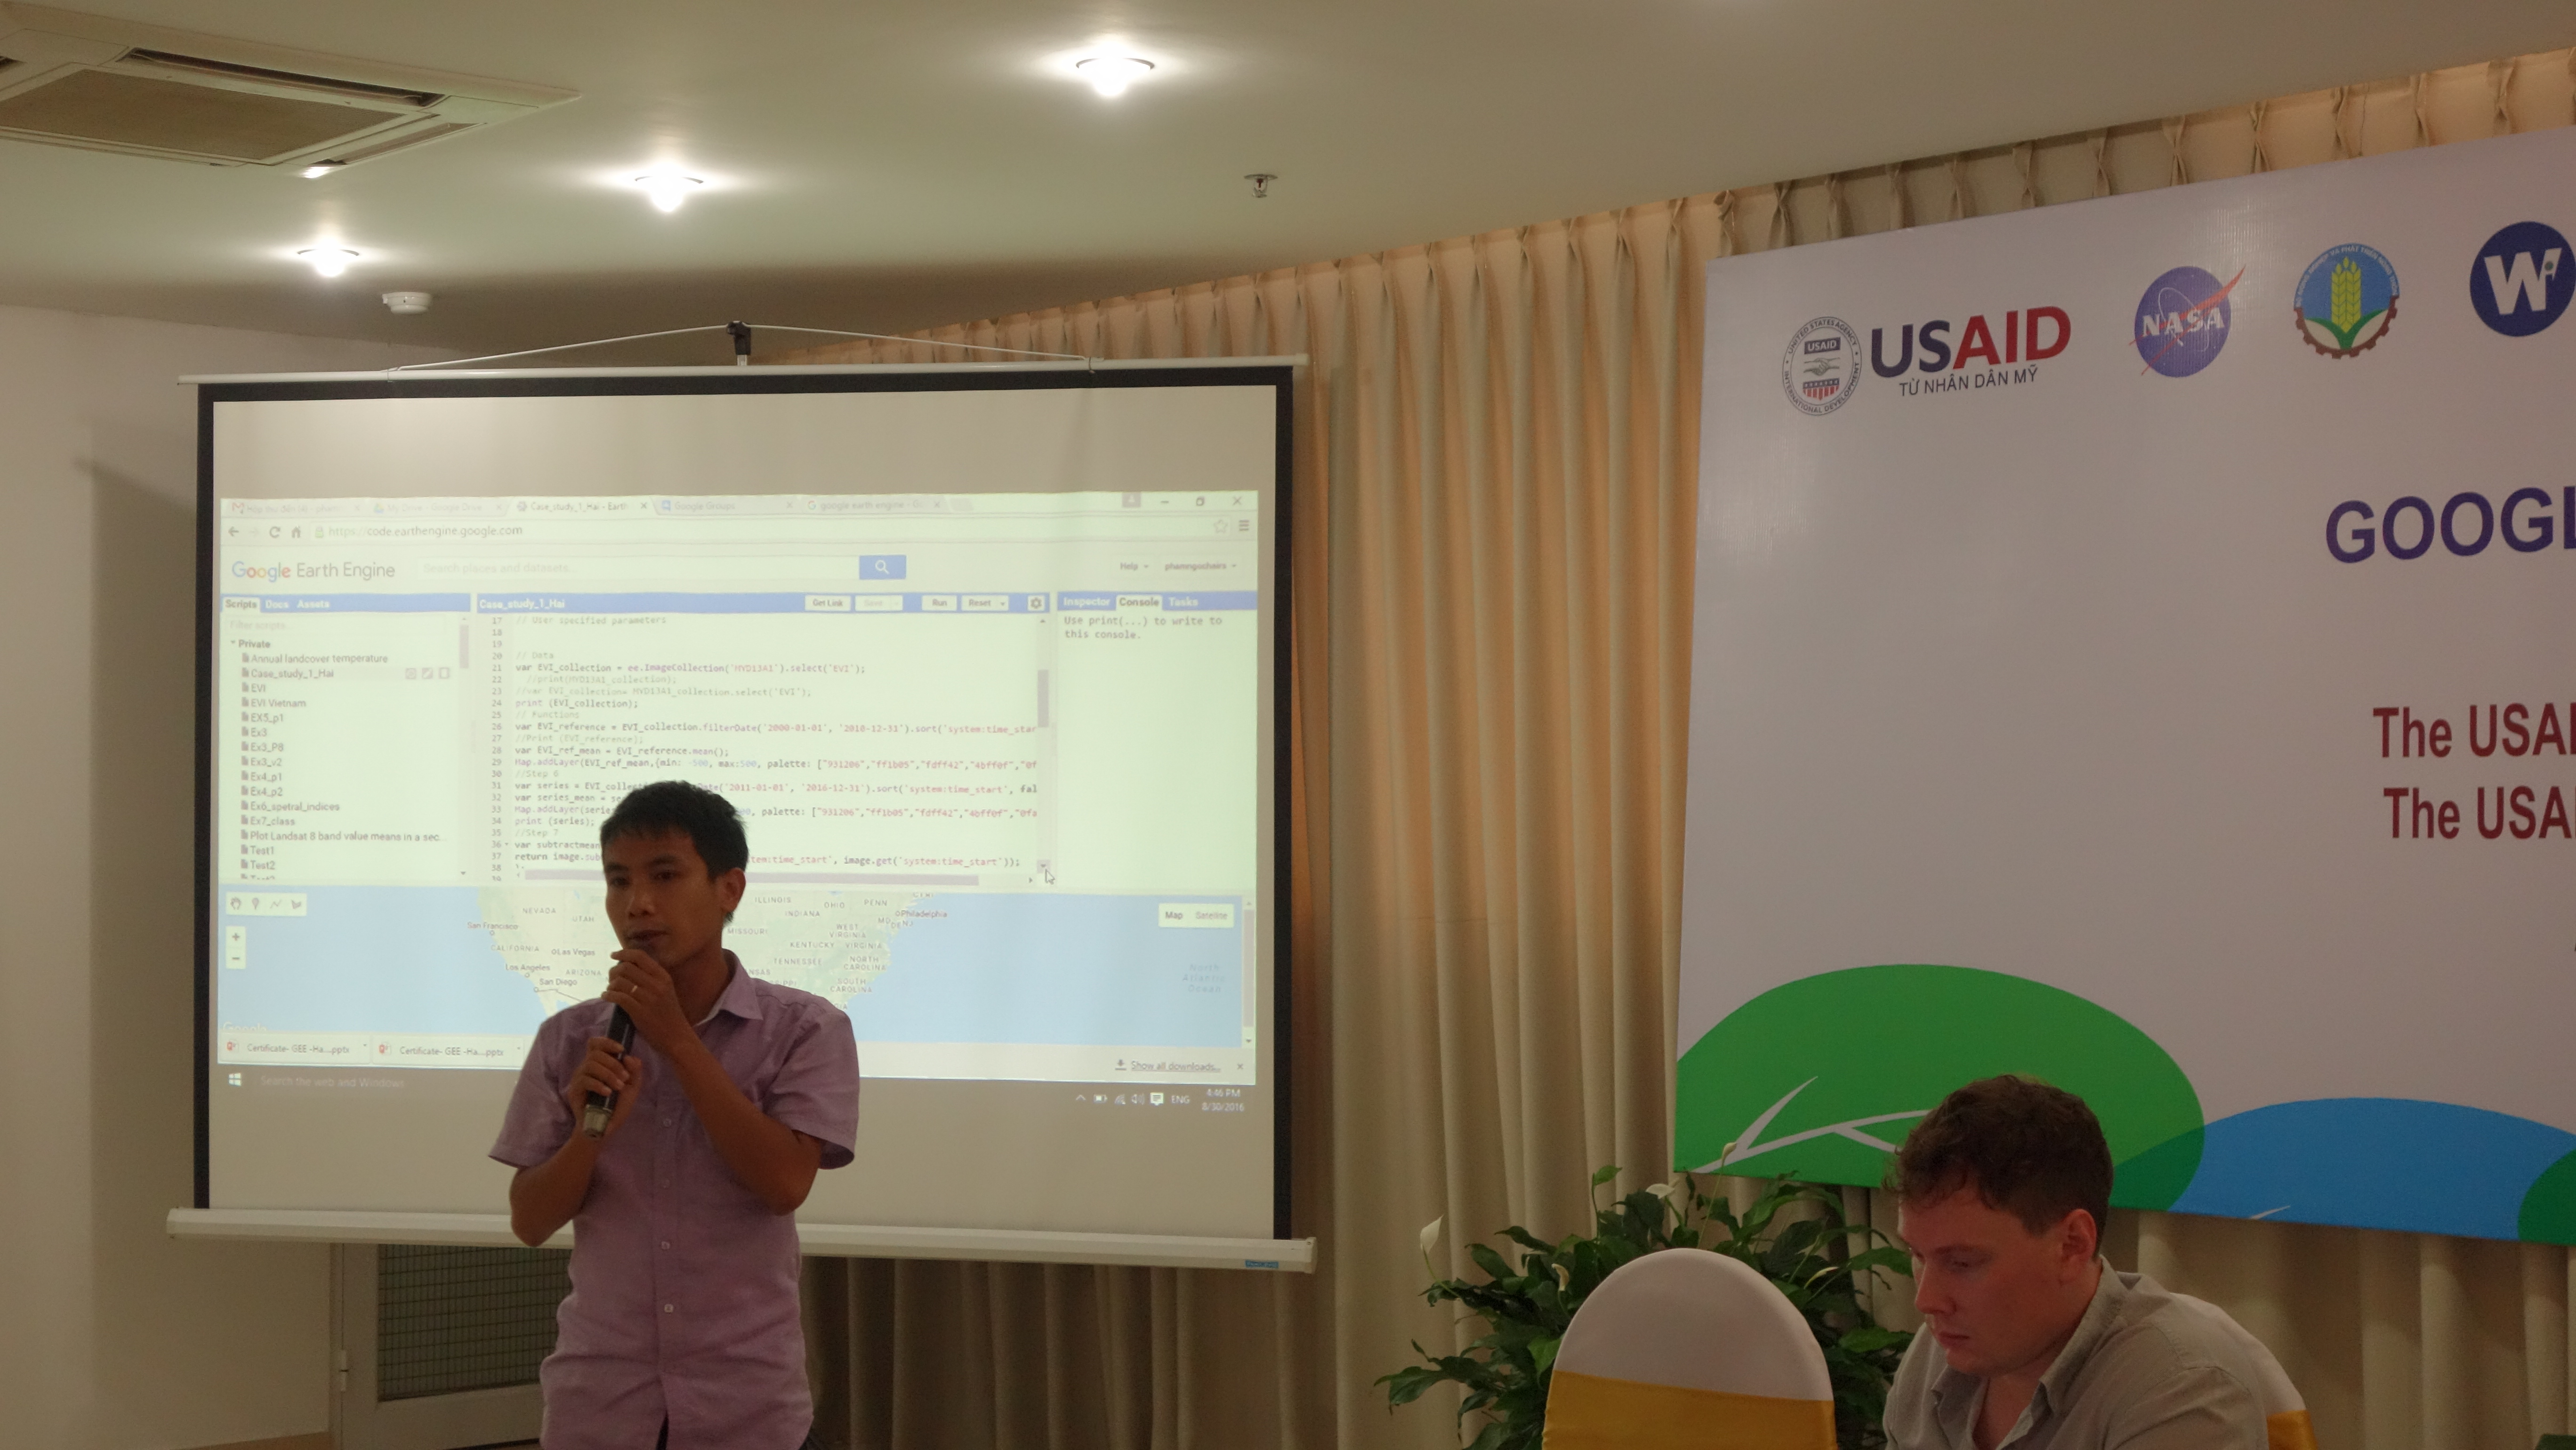 Pham Ngoc Hai during Google Earth Engine training in Hanoi